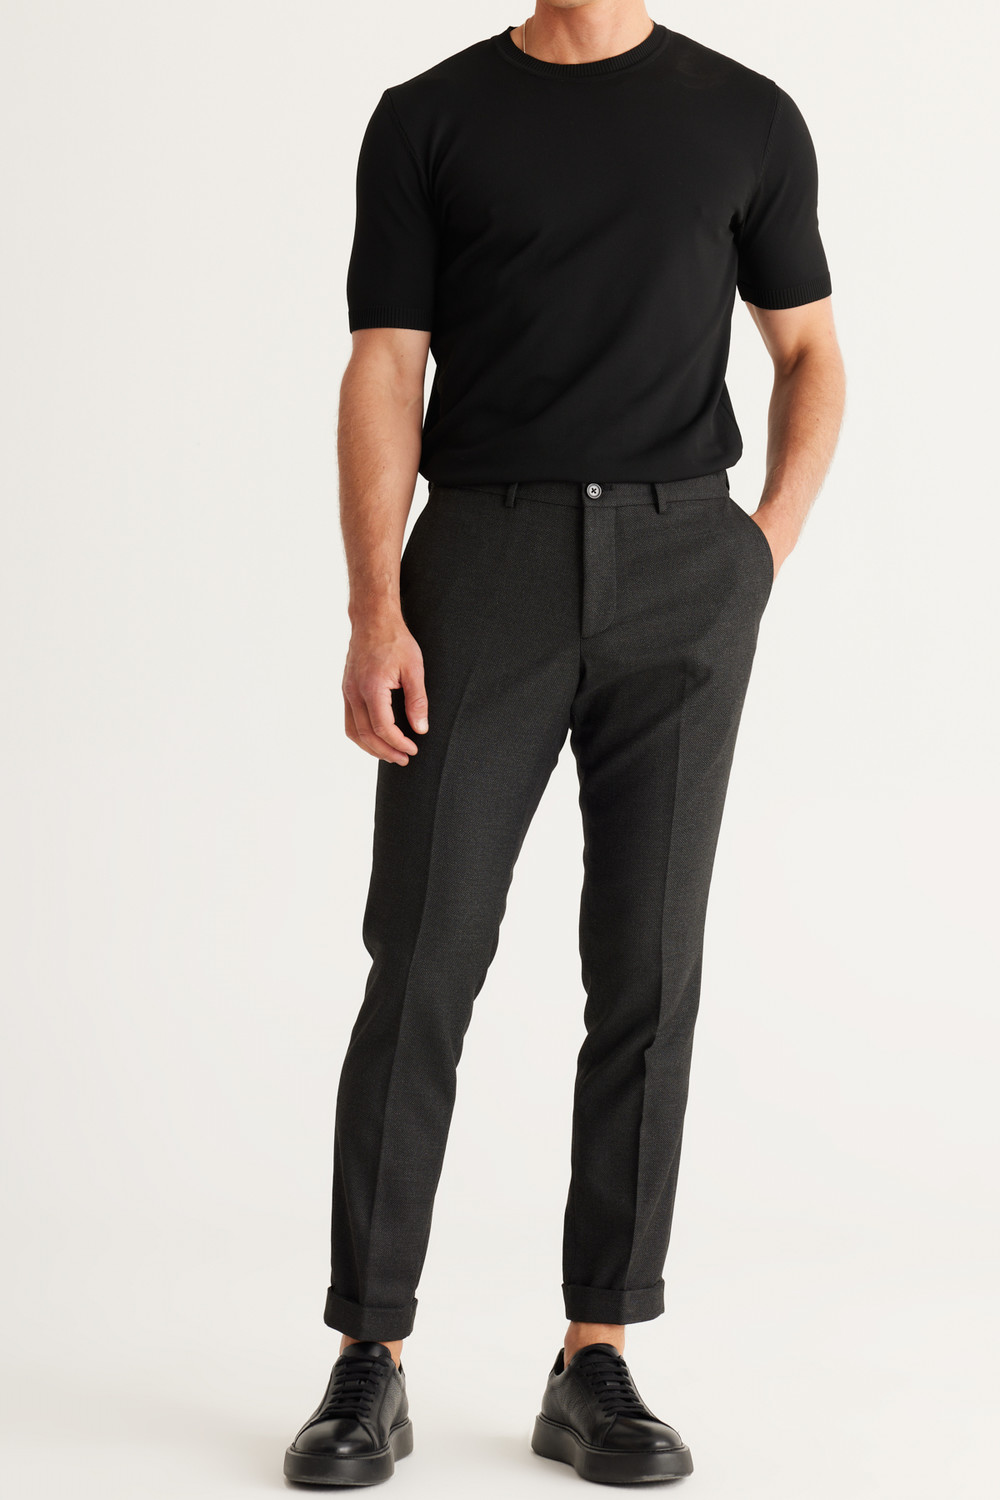 ALTINYILDIZ CLASSICS Men's Anthracite Slim Fit Slim Fit Trousers with Eyelet Pattern, Flexible Waist, Elastic Tie Trousers.